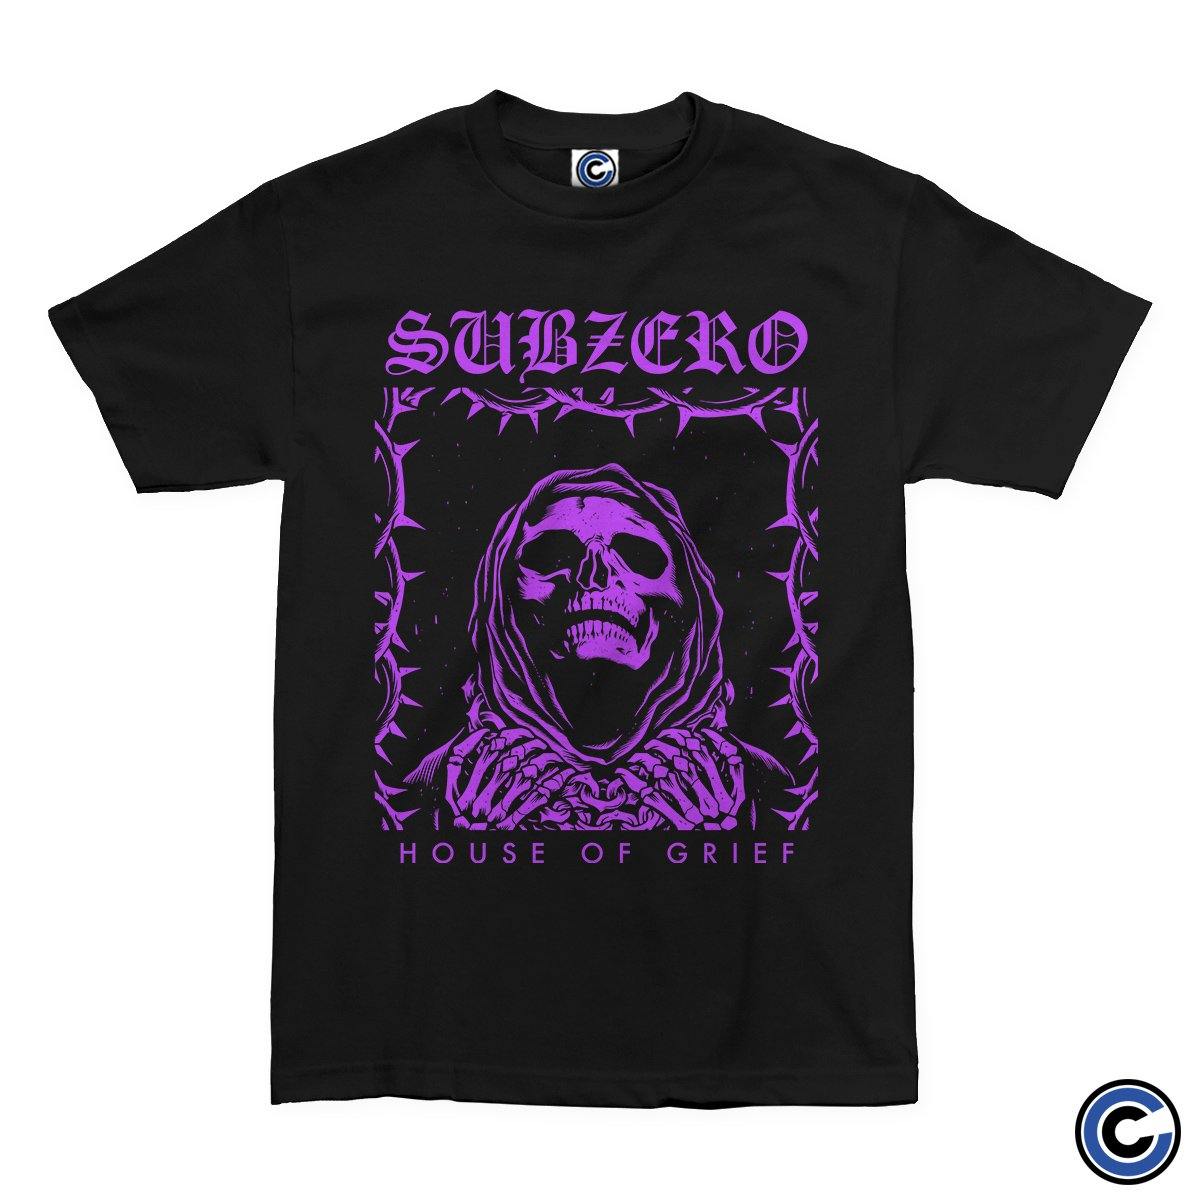 Buy – Subzero "Grief" Shirt – Band & Music Merch – Cold Cuts Merch